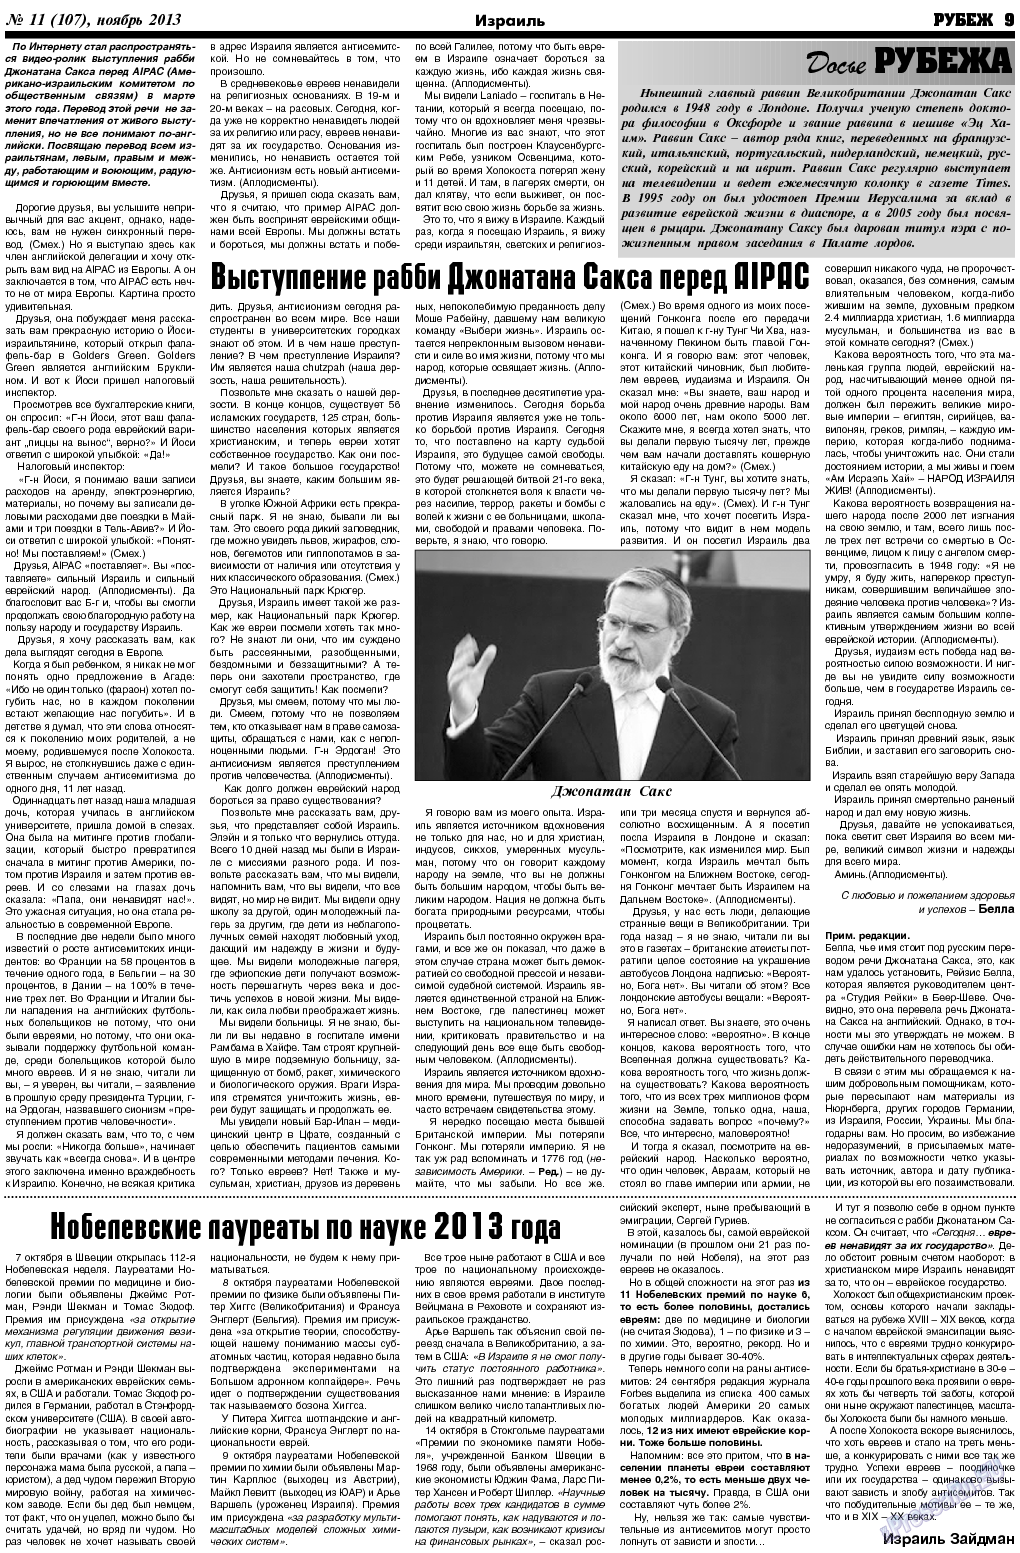 Рубеж, газета. 2013 №11 стр.9